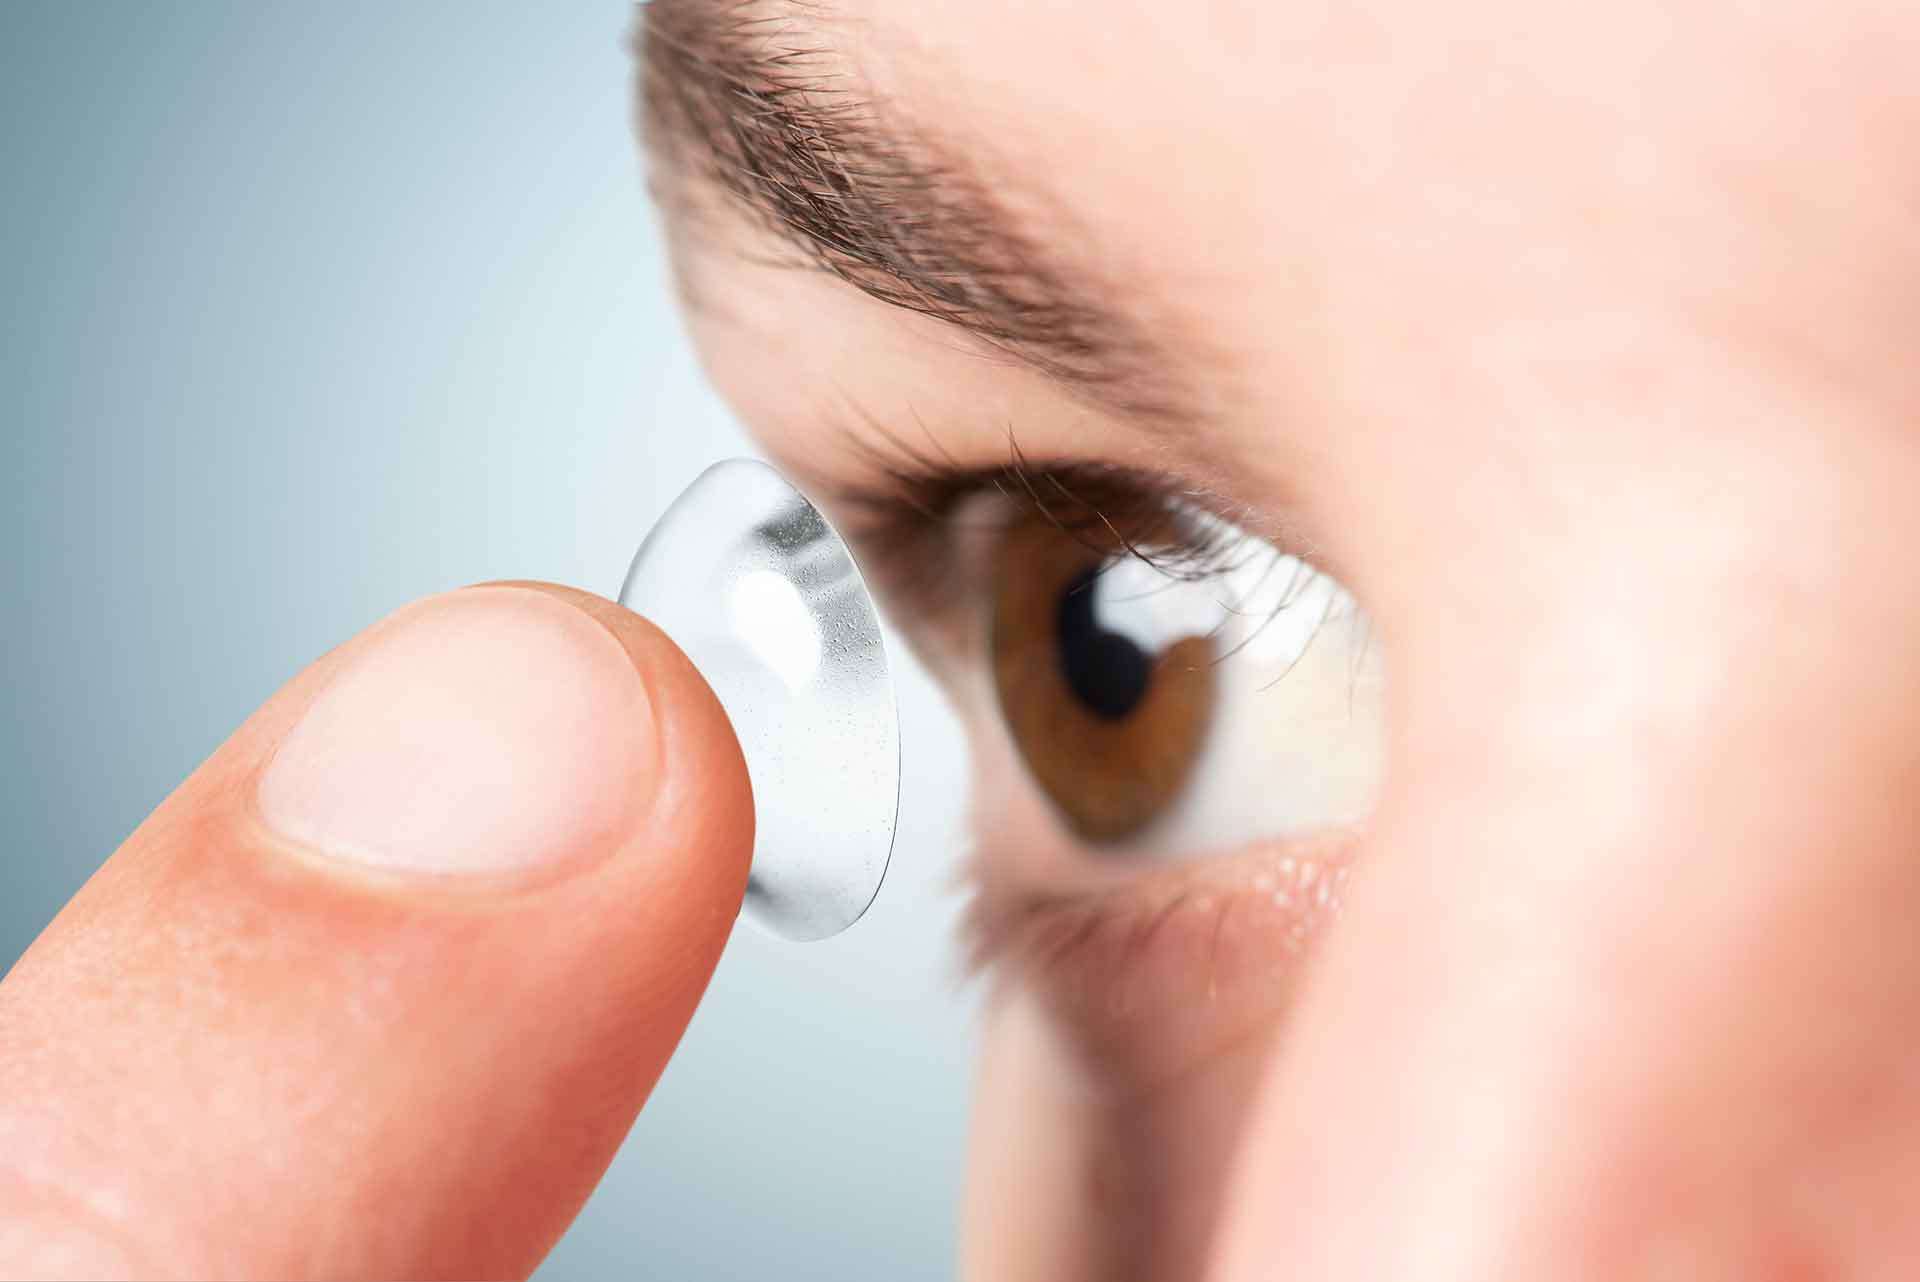 kontakt lens nedir